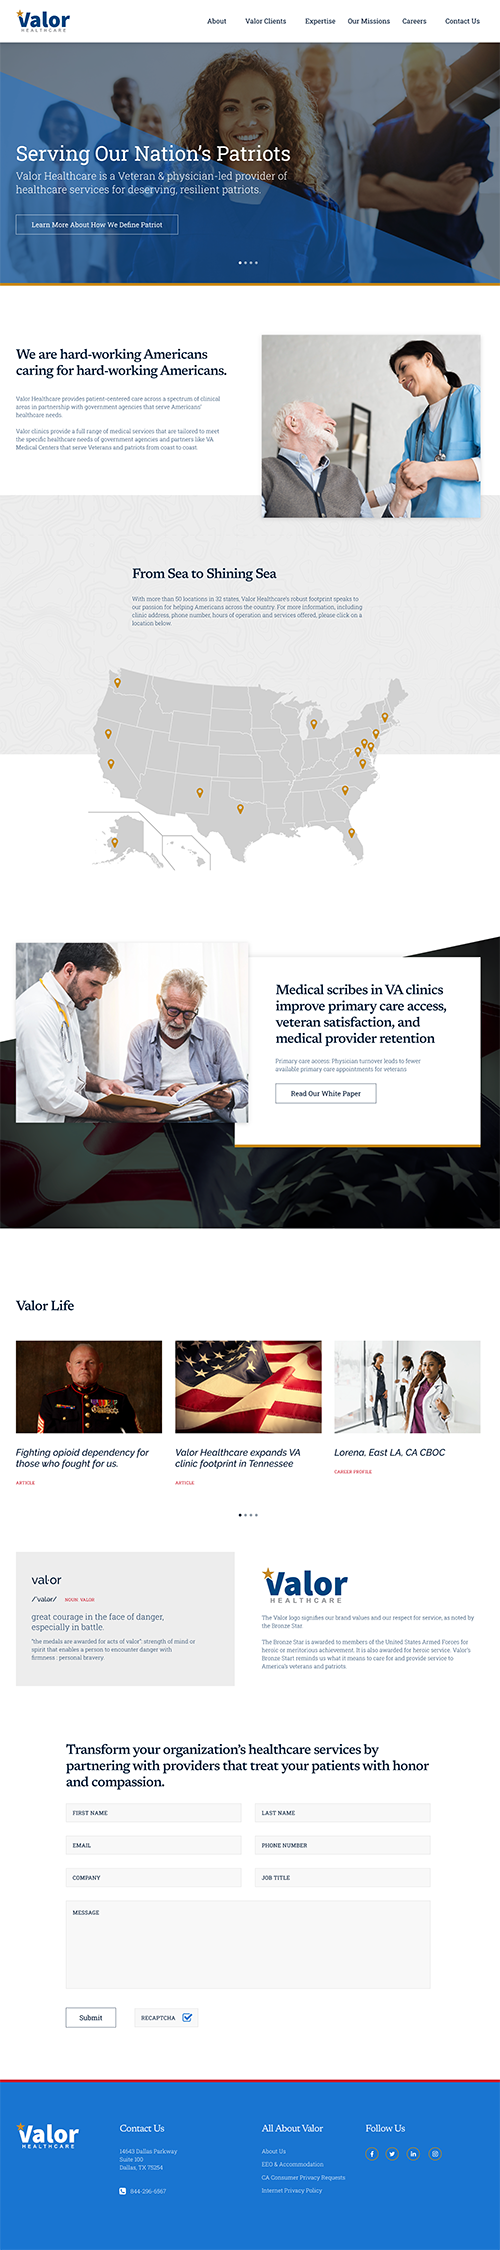 Valor Healthcare website redesign